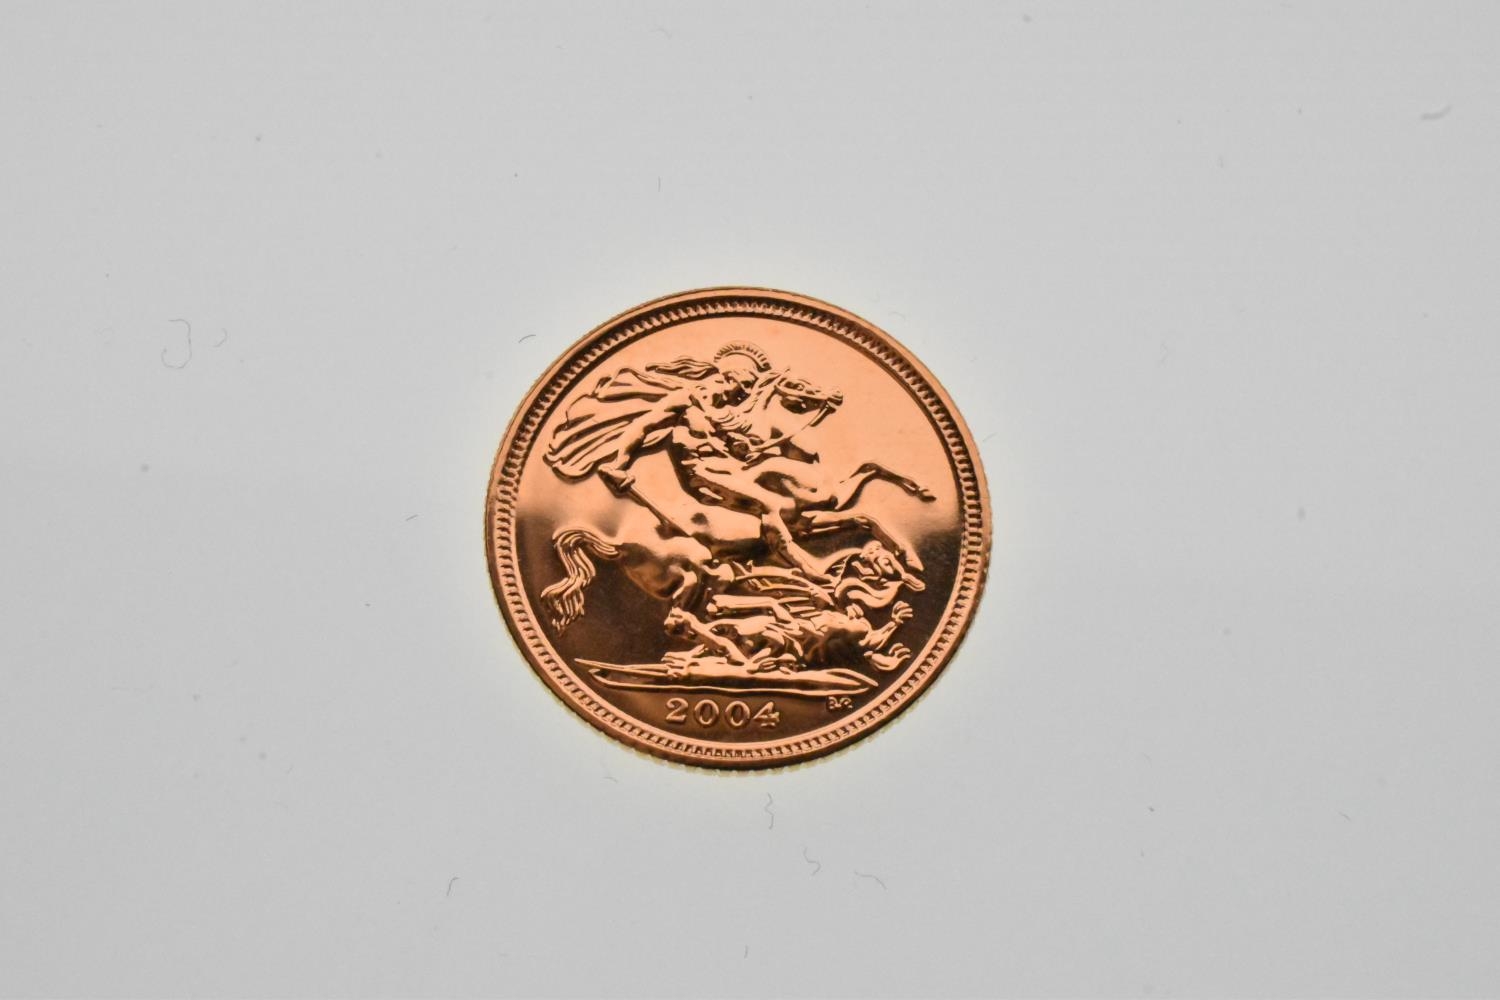 United Kingdom - Elizabeth II (1952-2022), Gold Half Sovereign, dated 2004, - Image 3 of 3